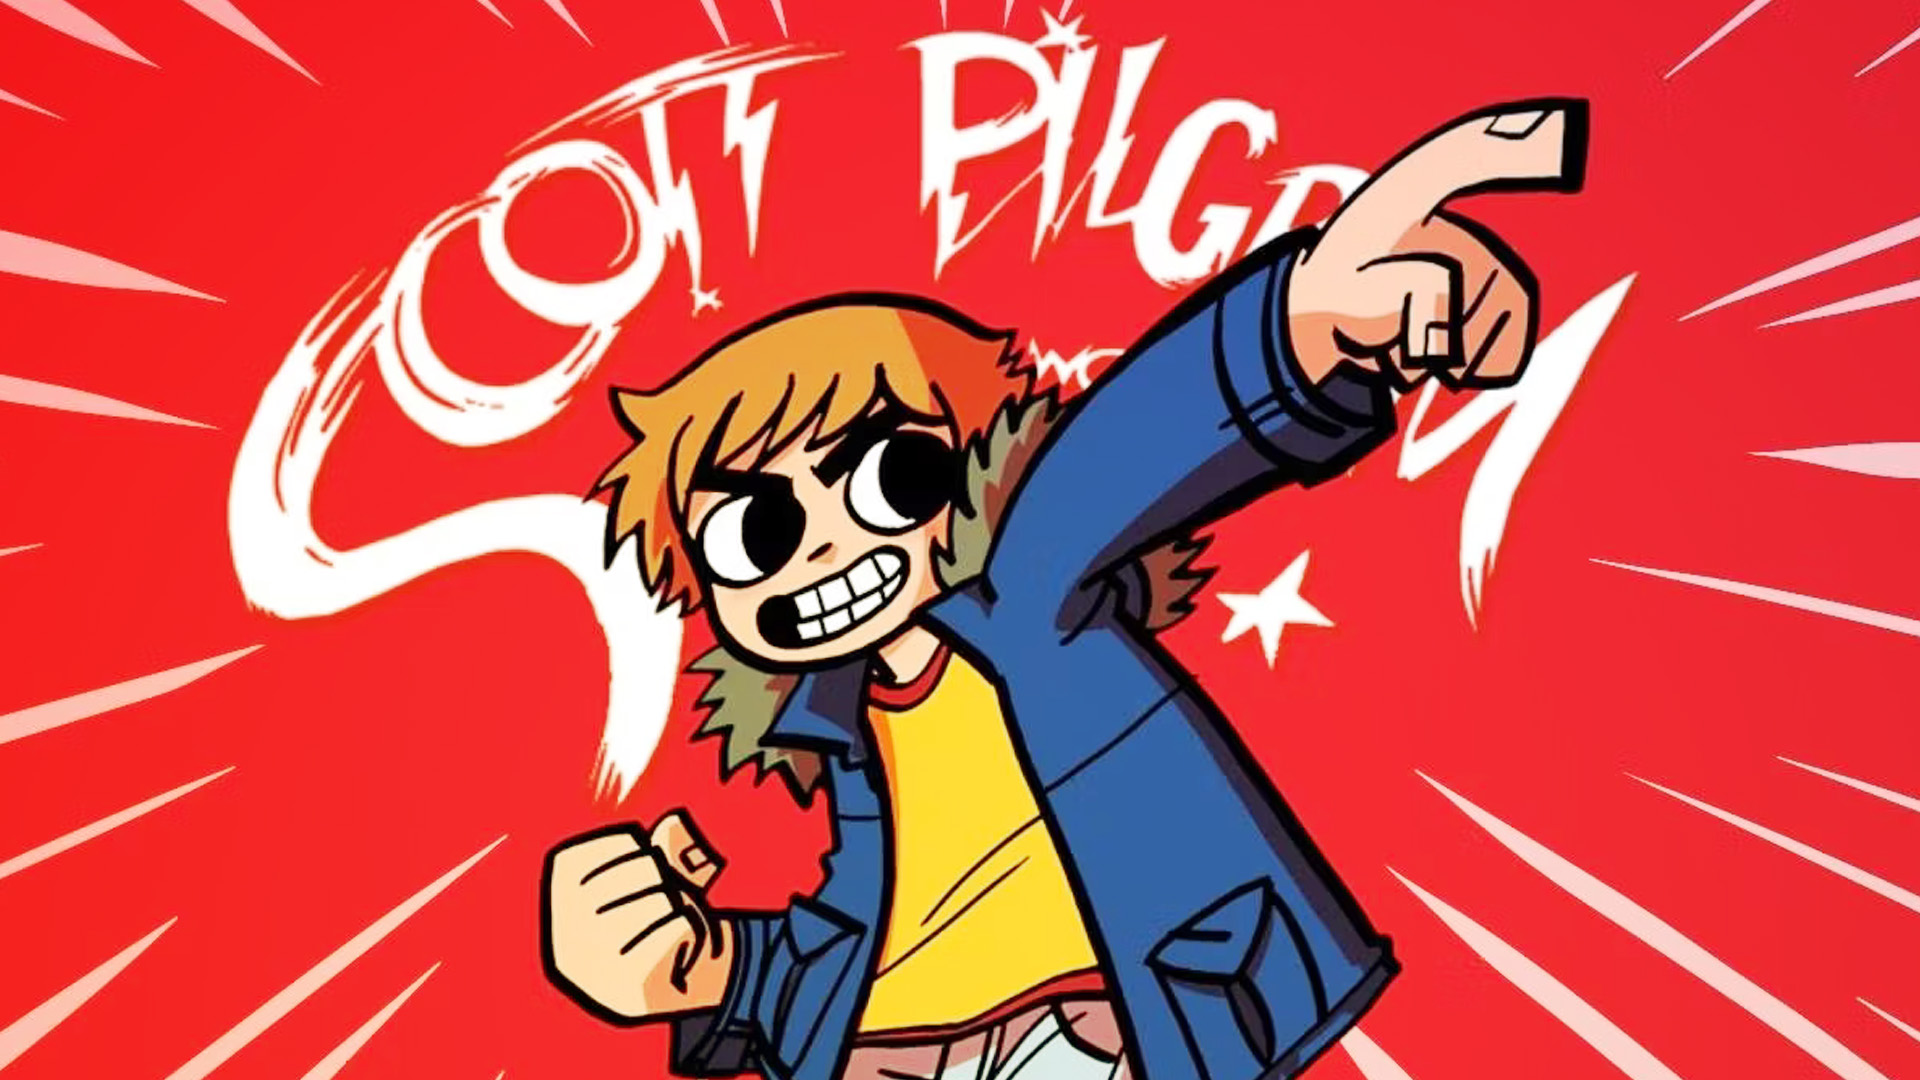 Scott Pilgrim Creator Breaks Silence on Its Anime